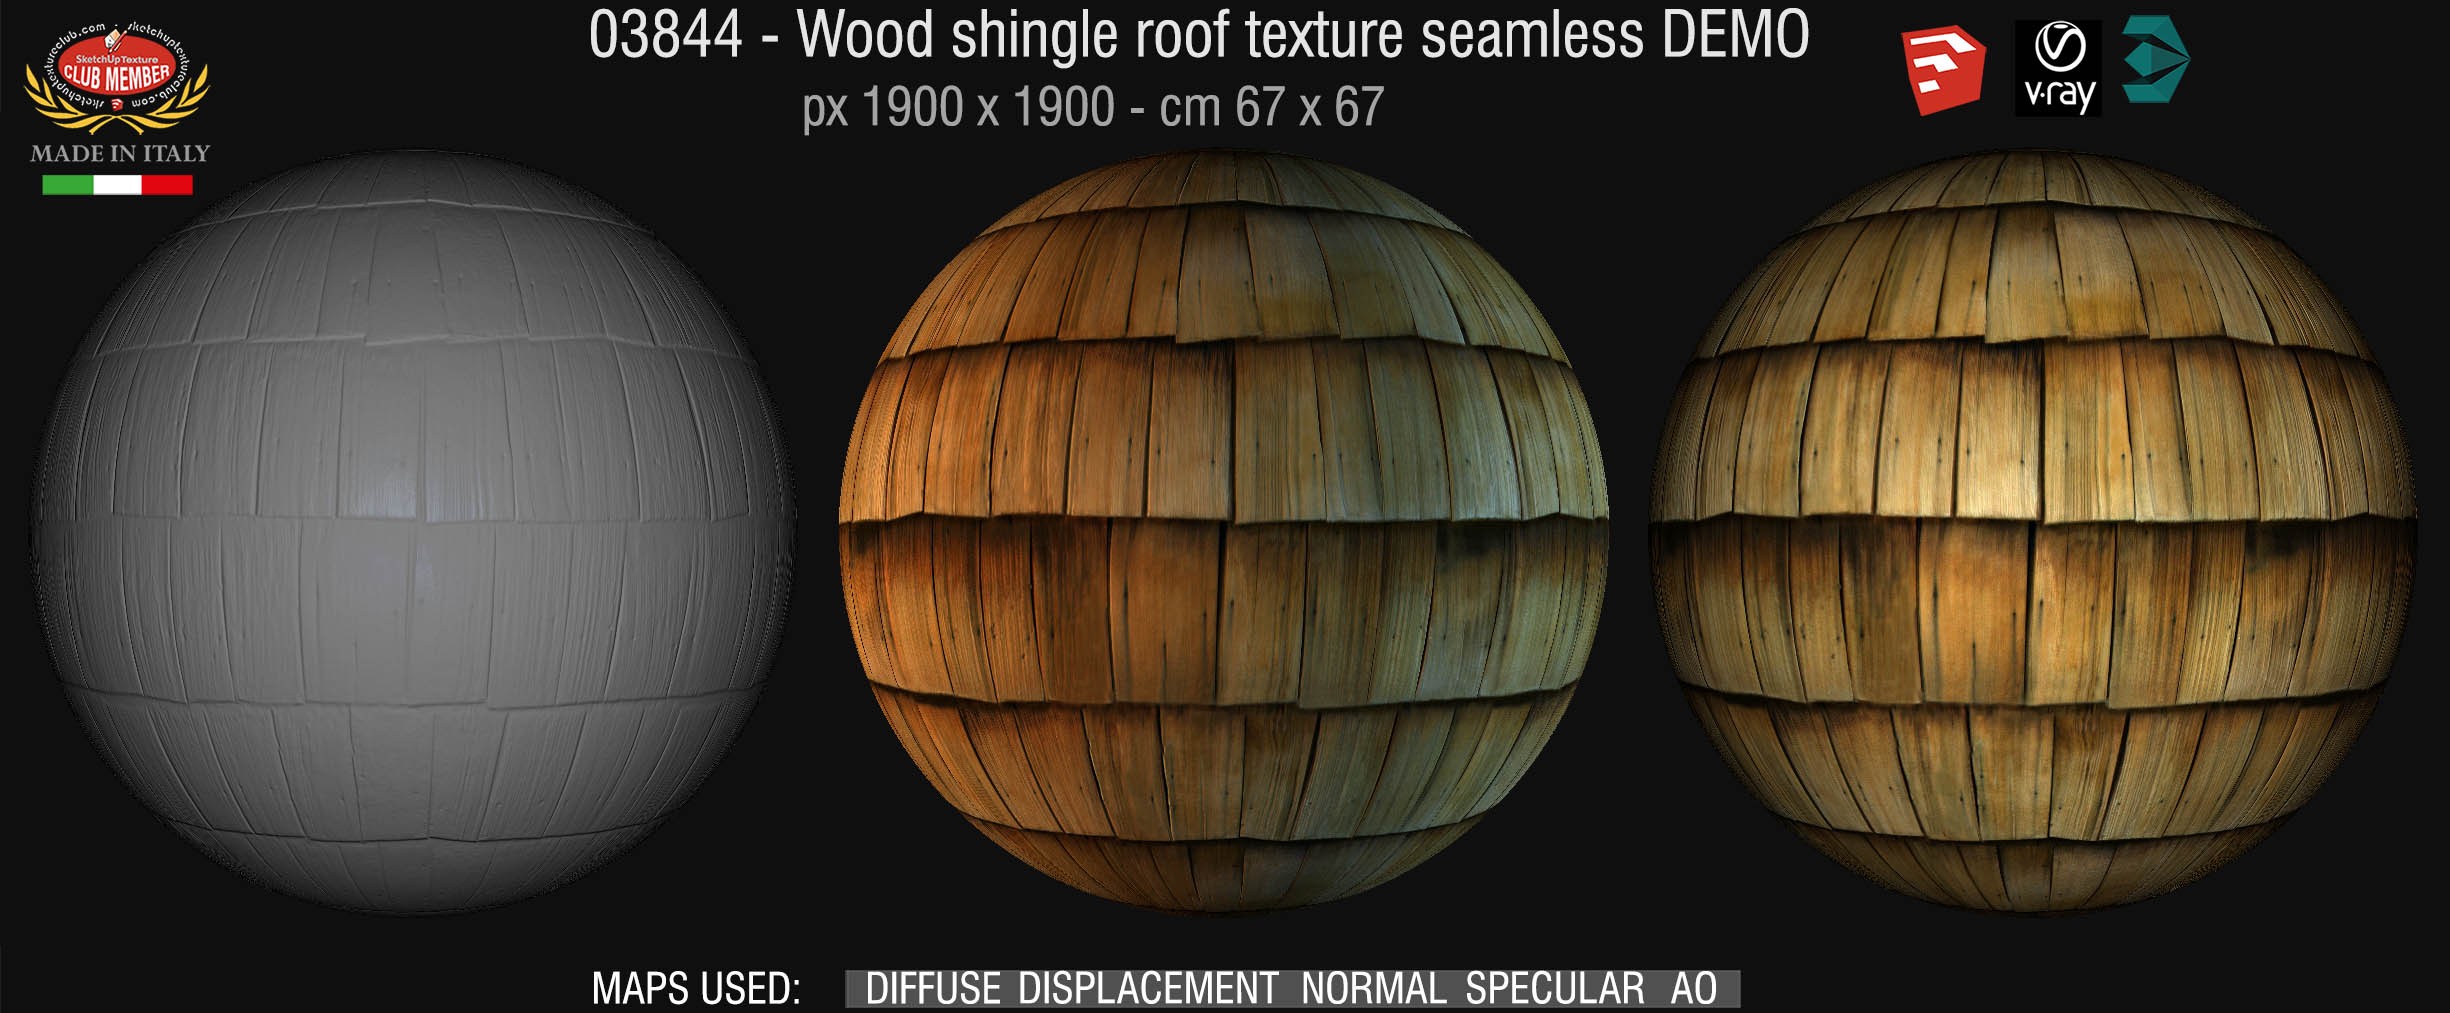 03844 Wood shingle roof texture seamless + maps DEMO